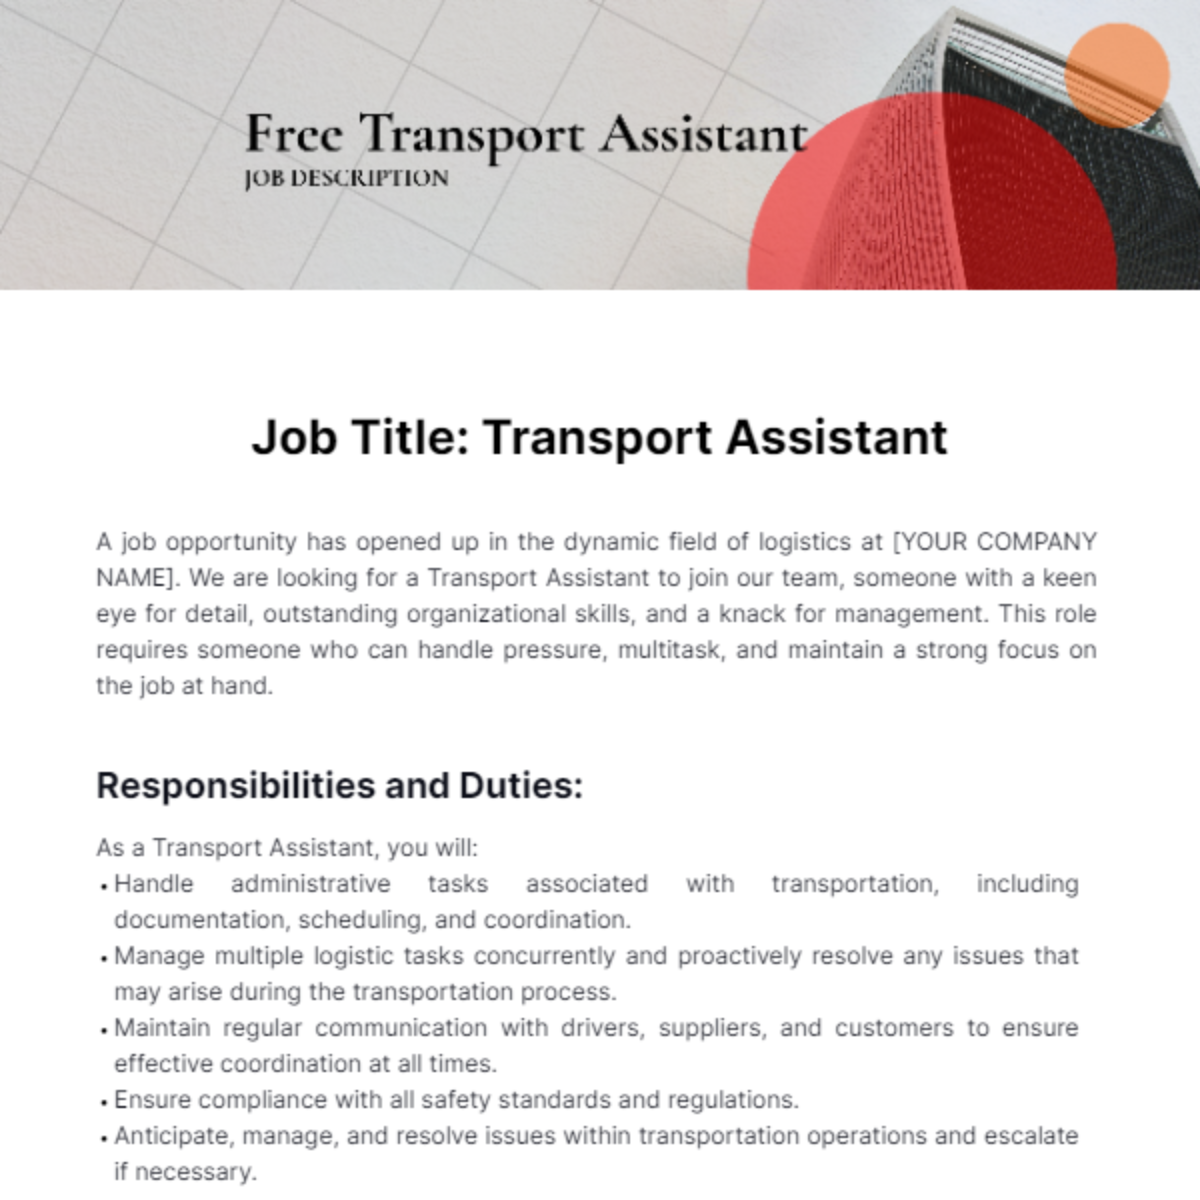 Free Transport Assistant Job Description Template